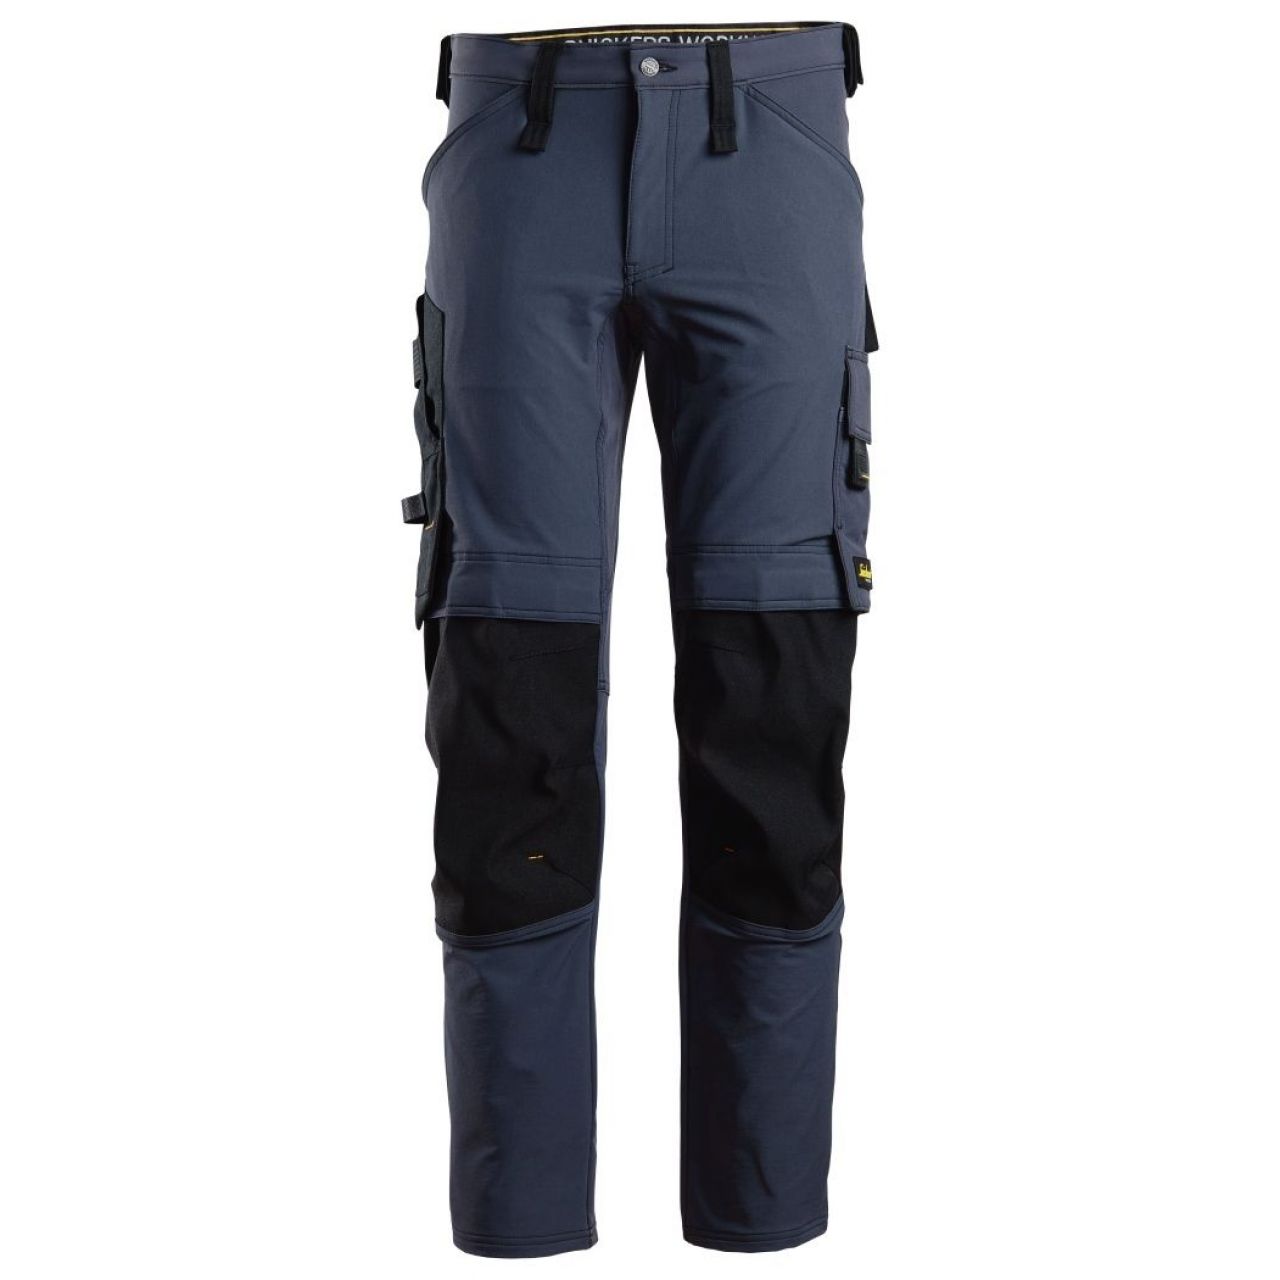 Pantalon elastico AllroundWork azul marino-negro talla 160